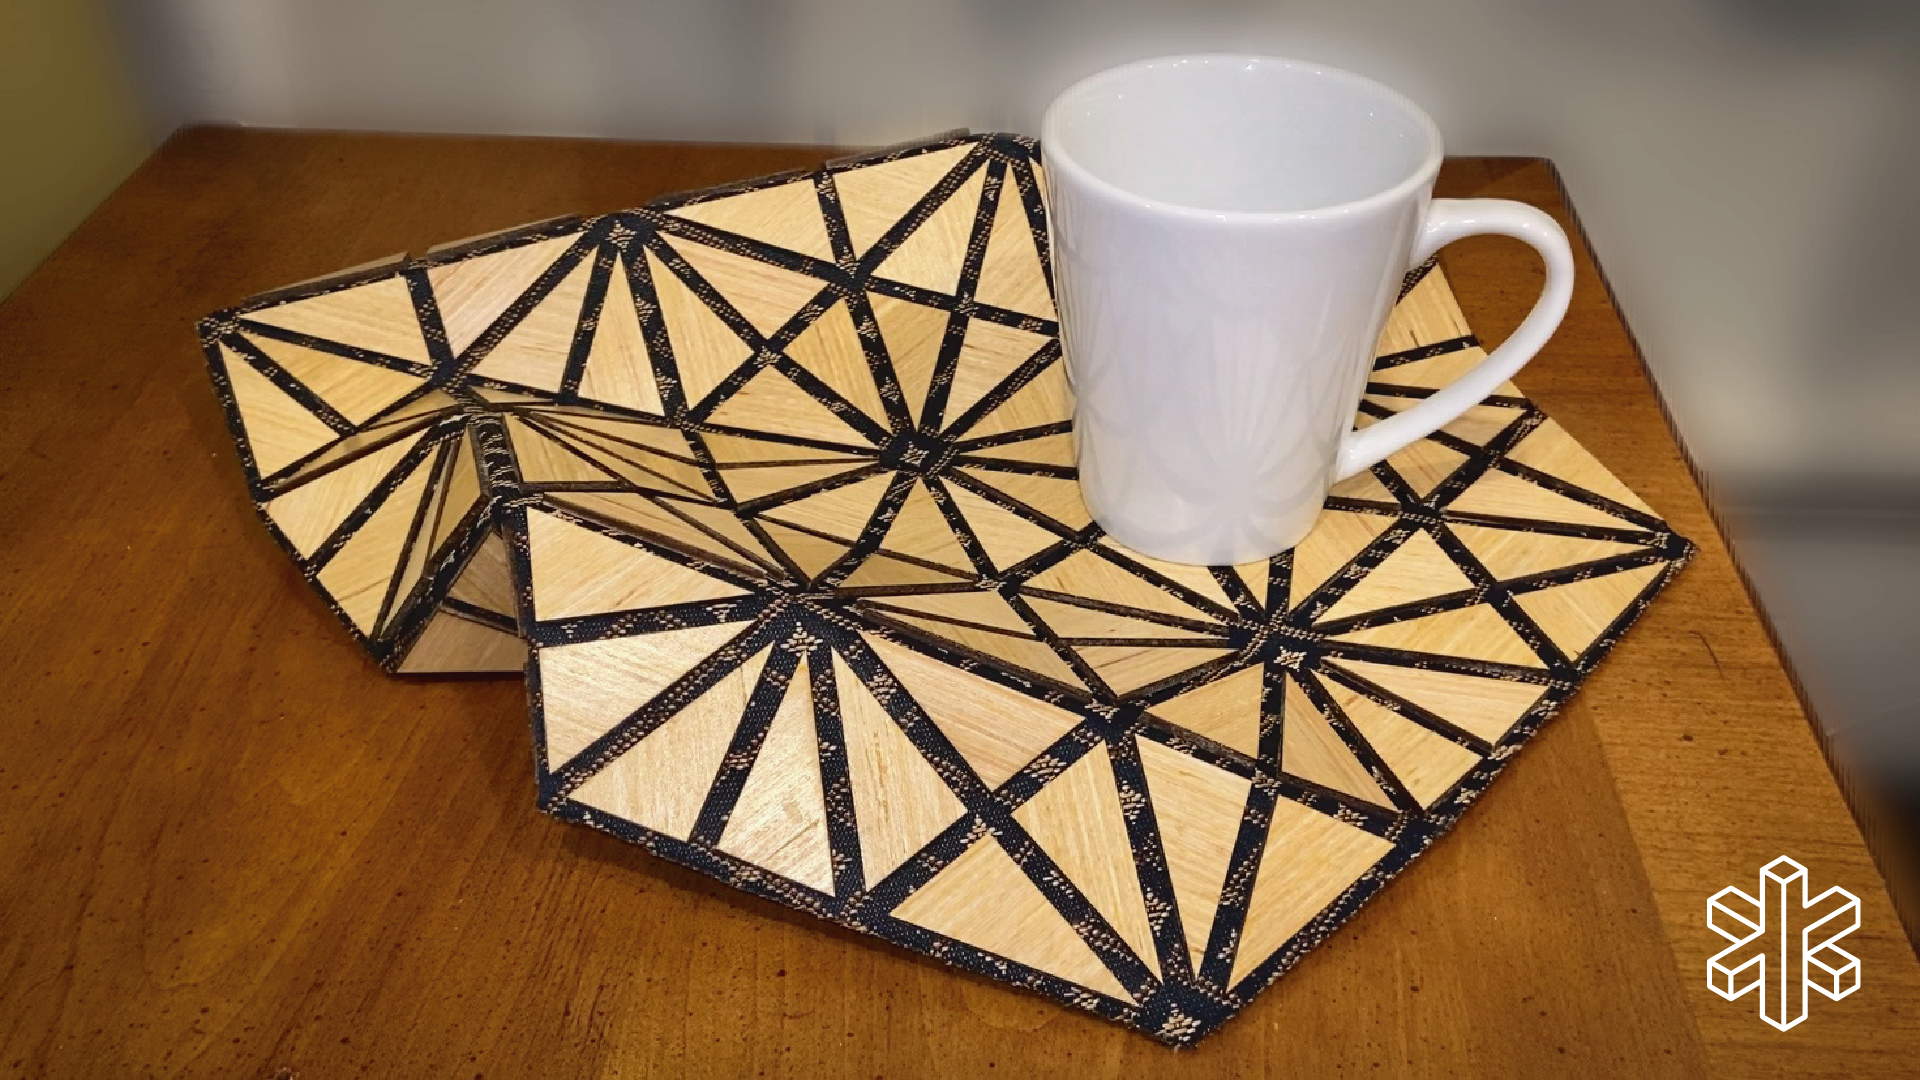 foldable tivet with geometric patterns